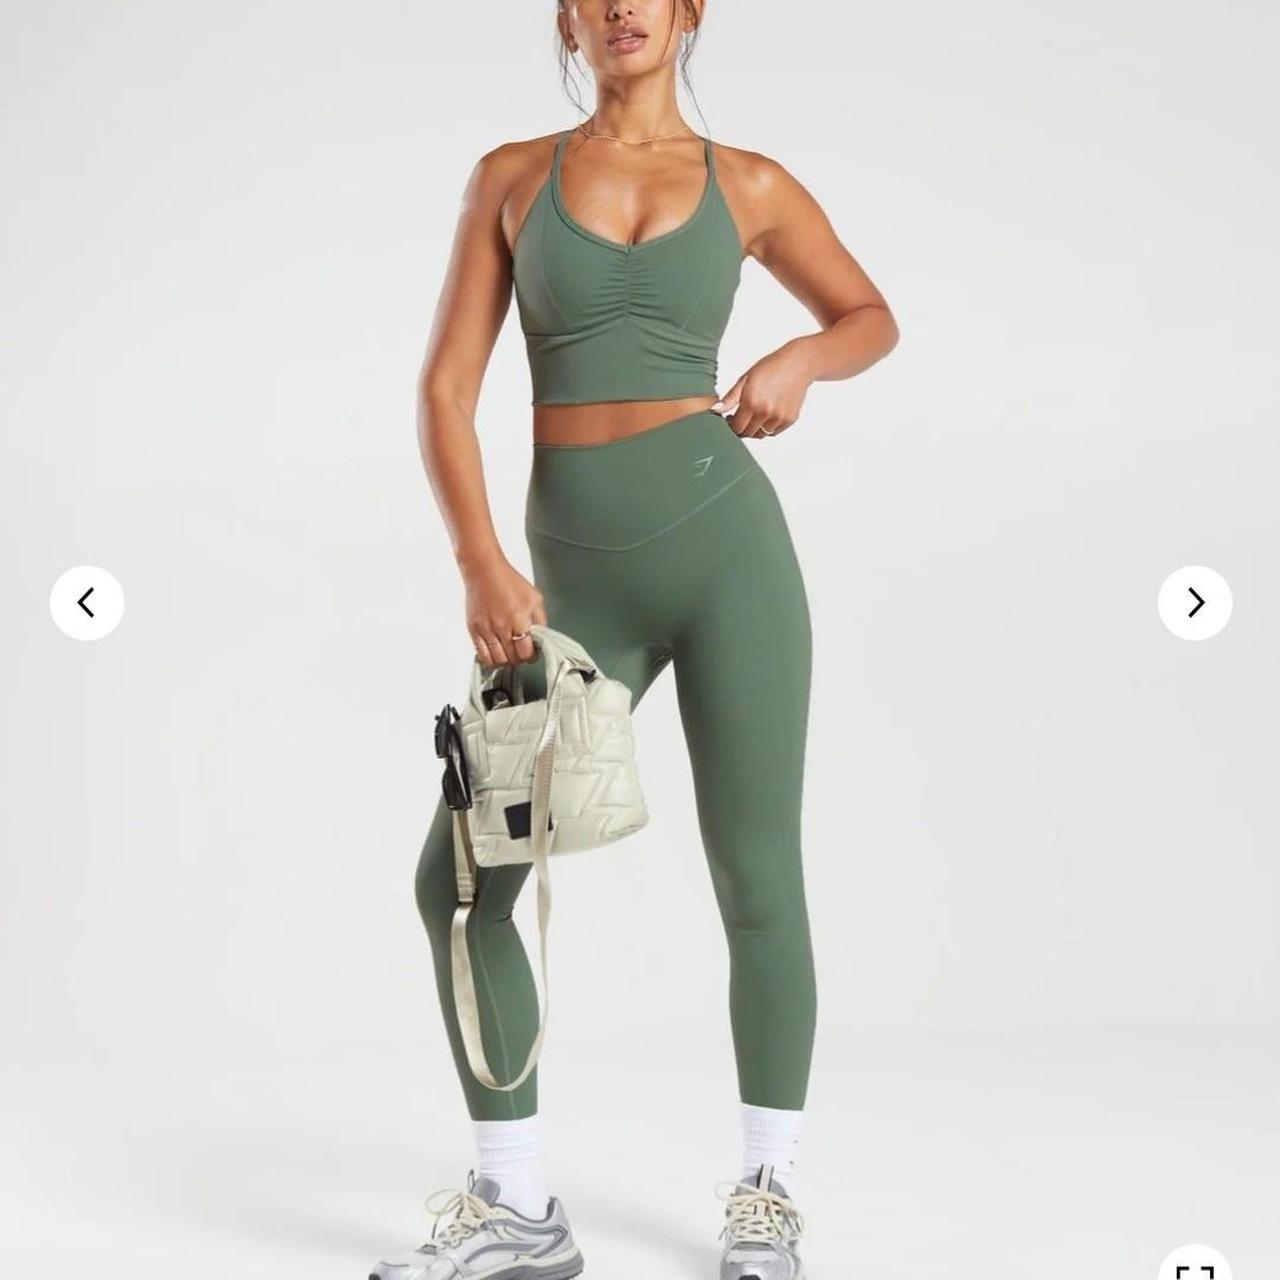 Gymshark elevate set in green including leggings - Depop